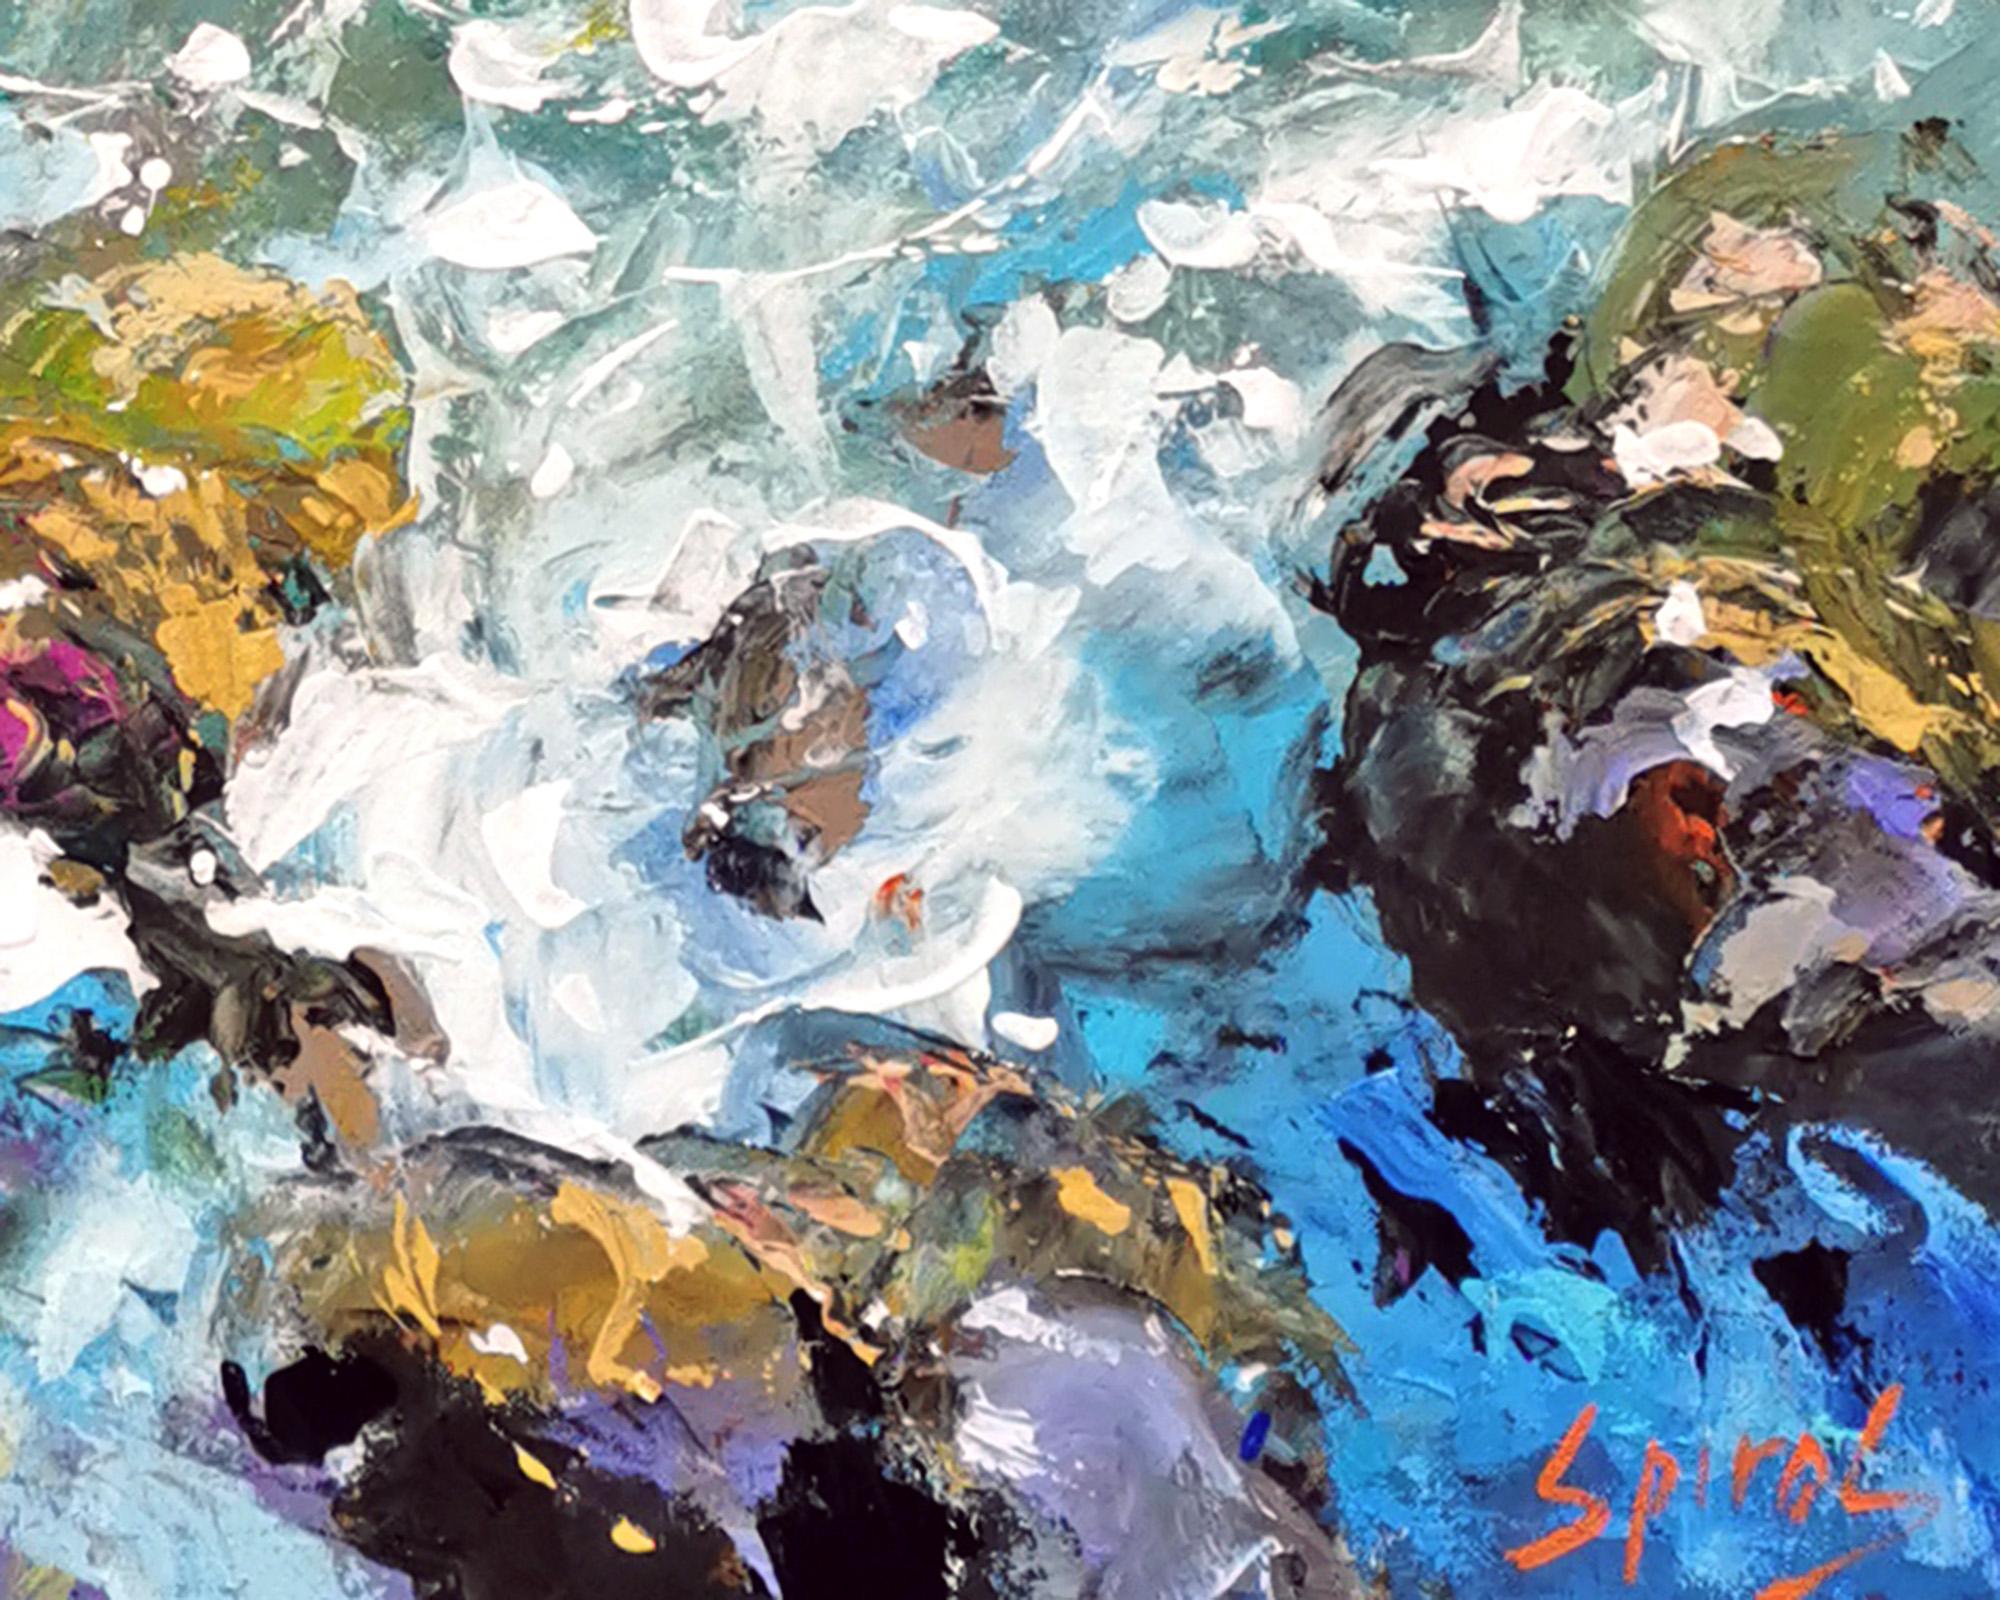 Caribbean wave2 - Impressionism 
oil. acr.  CANVAS,,
69 cm x 71 cm, 27